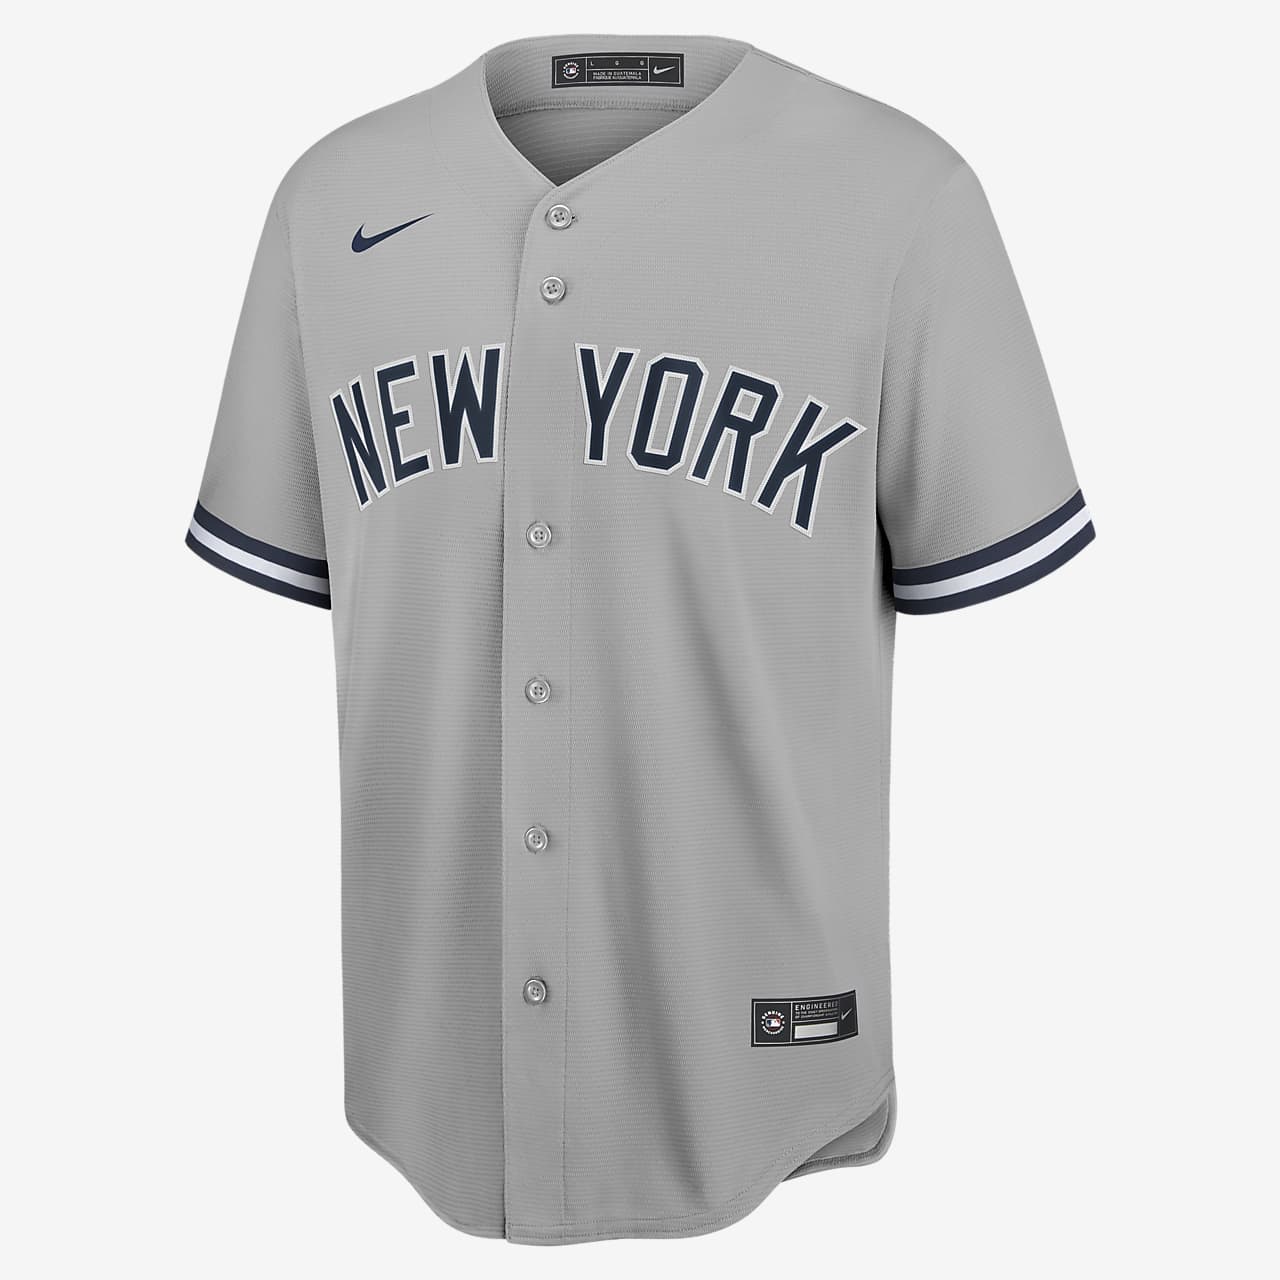 MLB New York Yankees (Giancarlo Stanton) Men's Replica Baseball Jersey. Nike.com